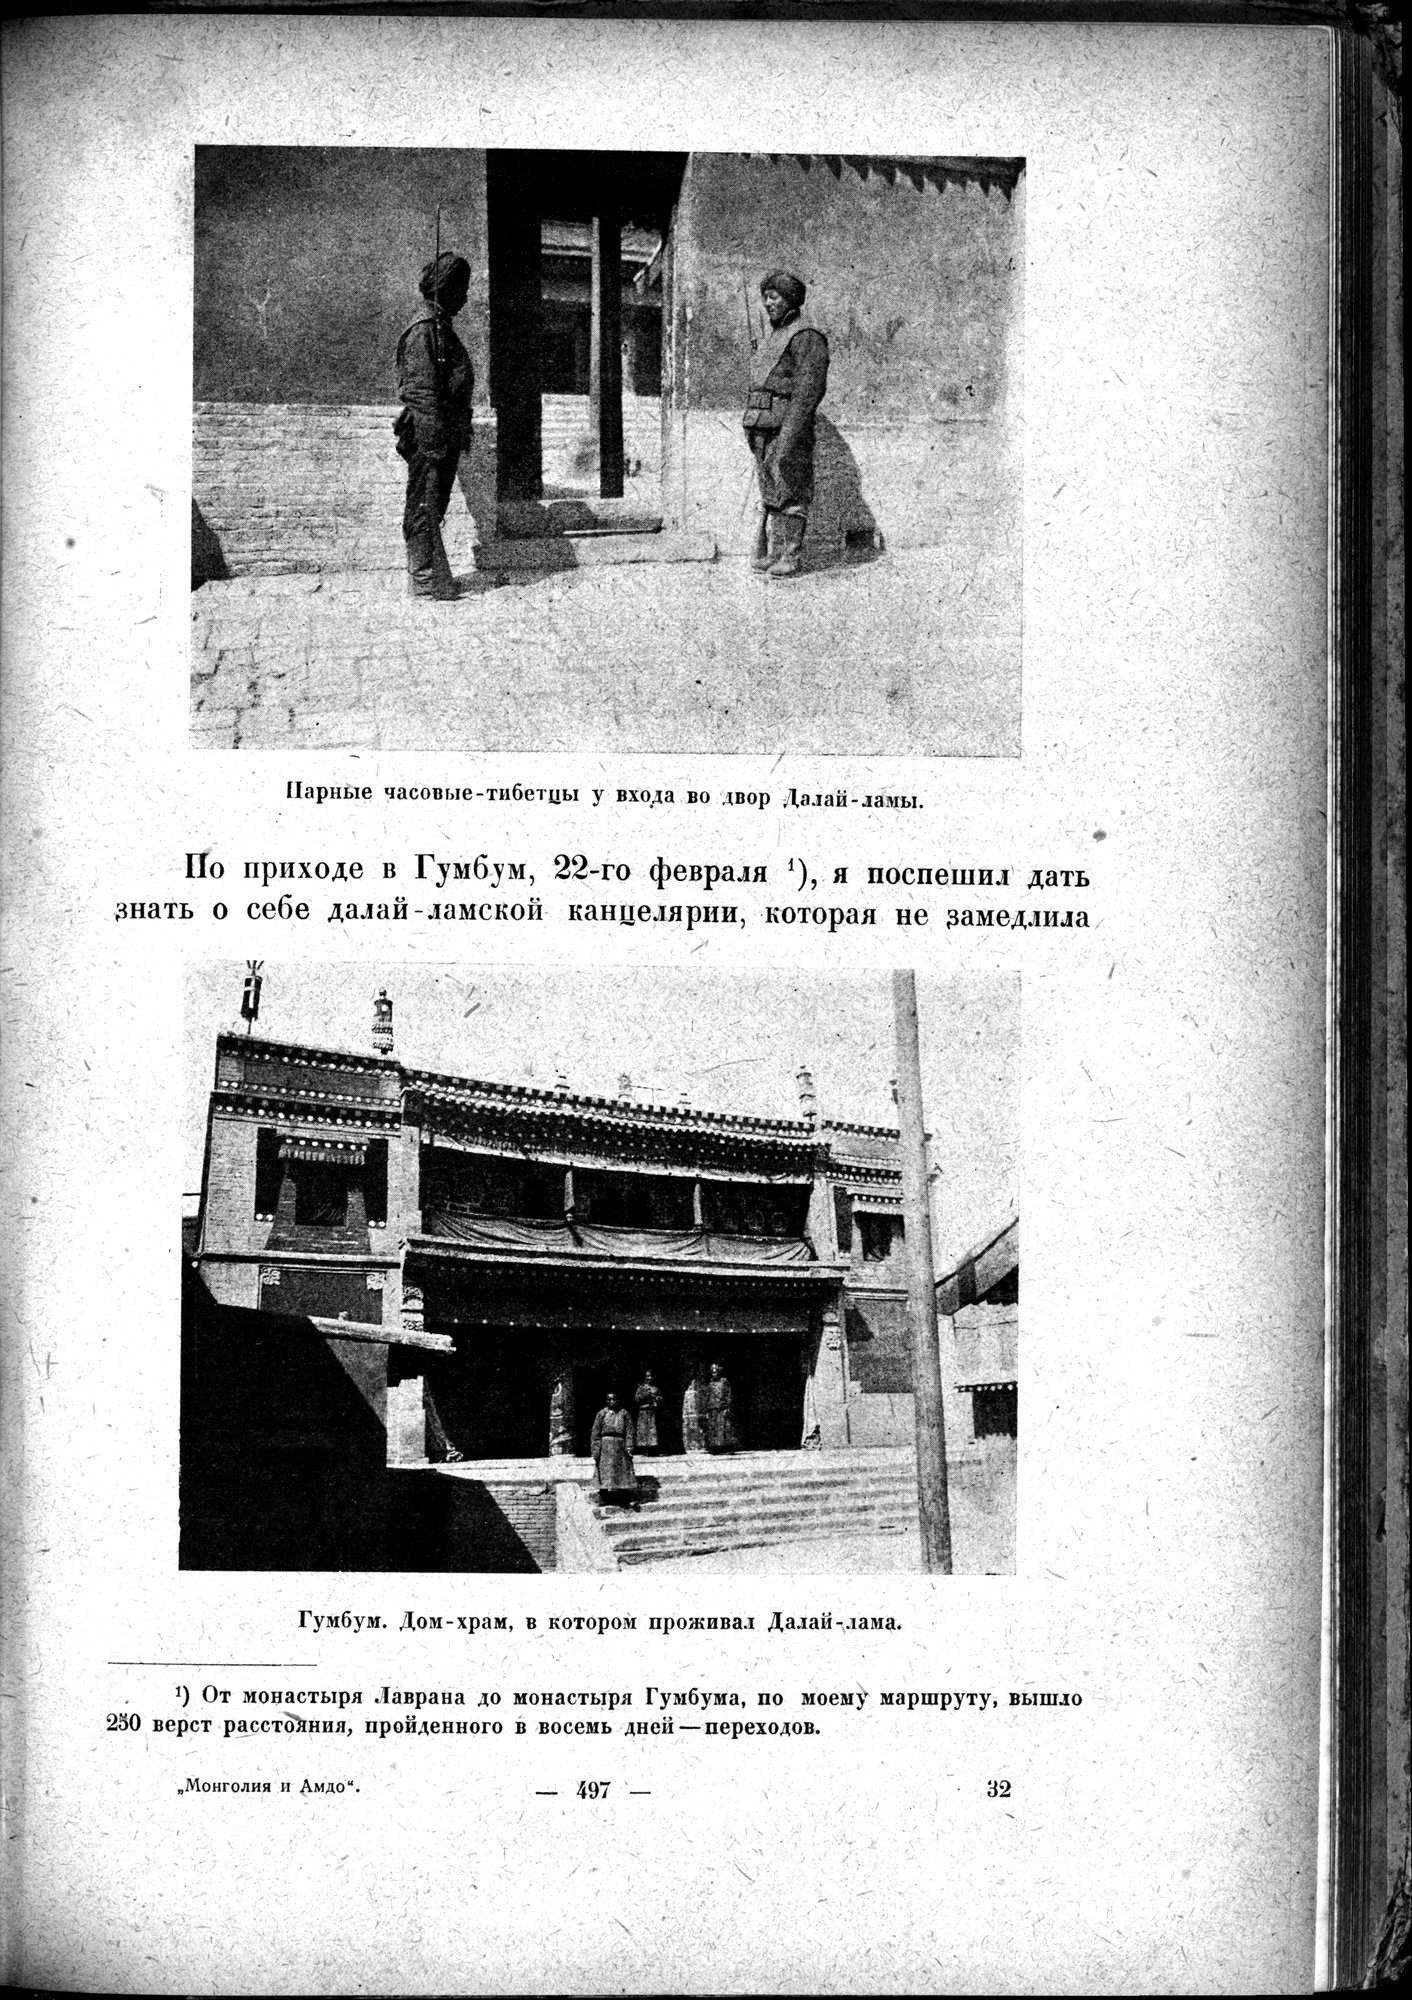 Mongoliya i Amdo i mertby gorod Khara-Khoto : vol.1 / Page 569 (Grayscale High Resolution Image)